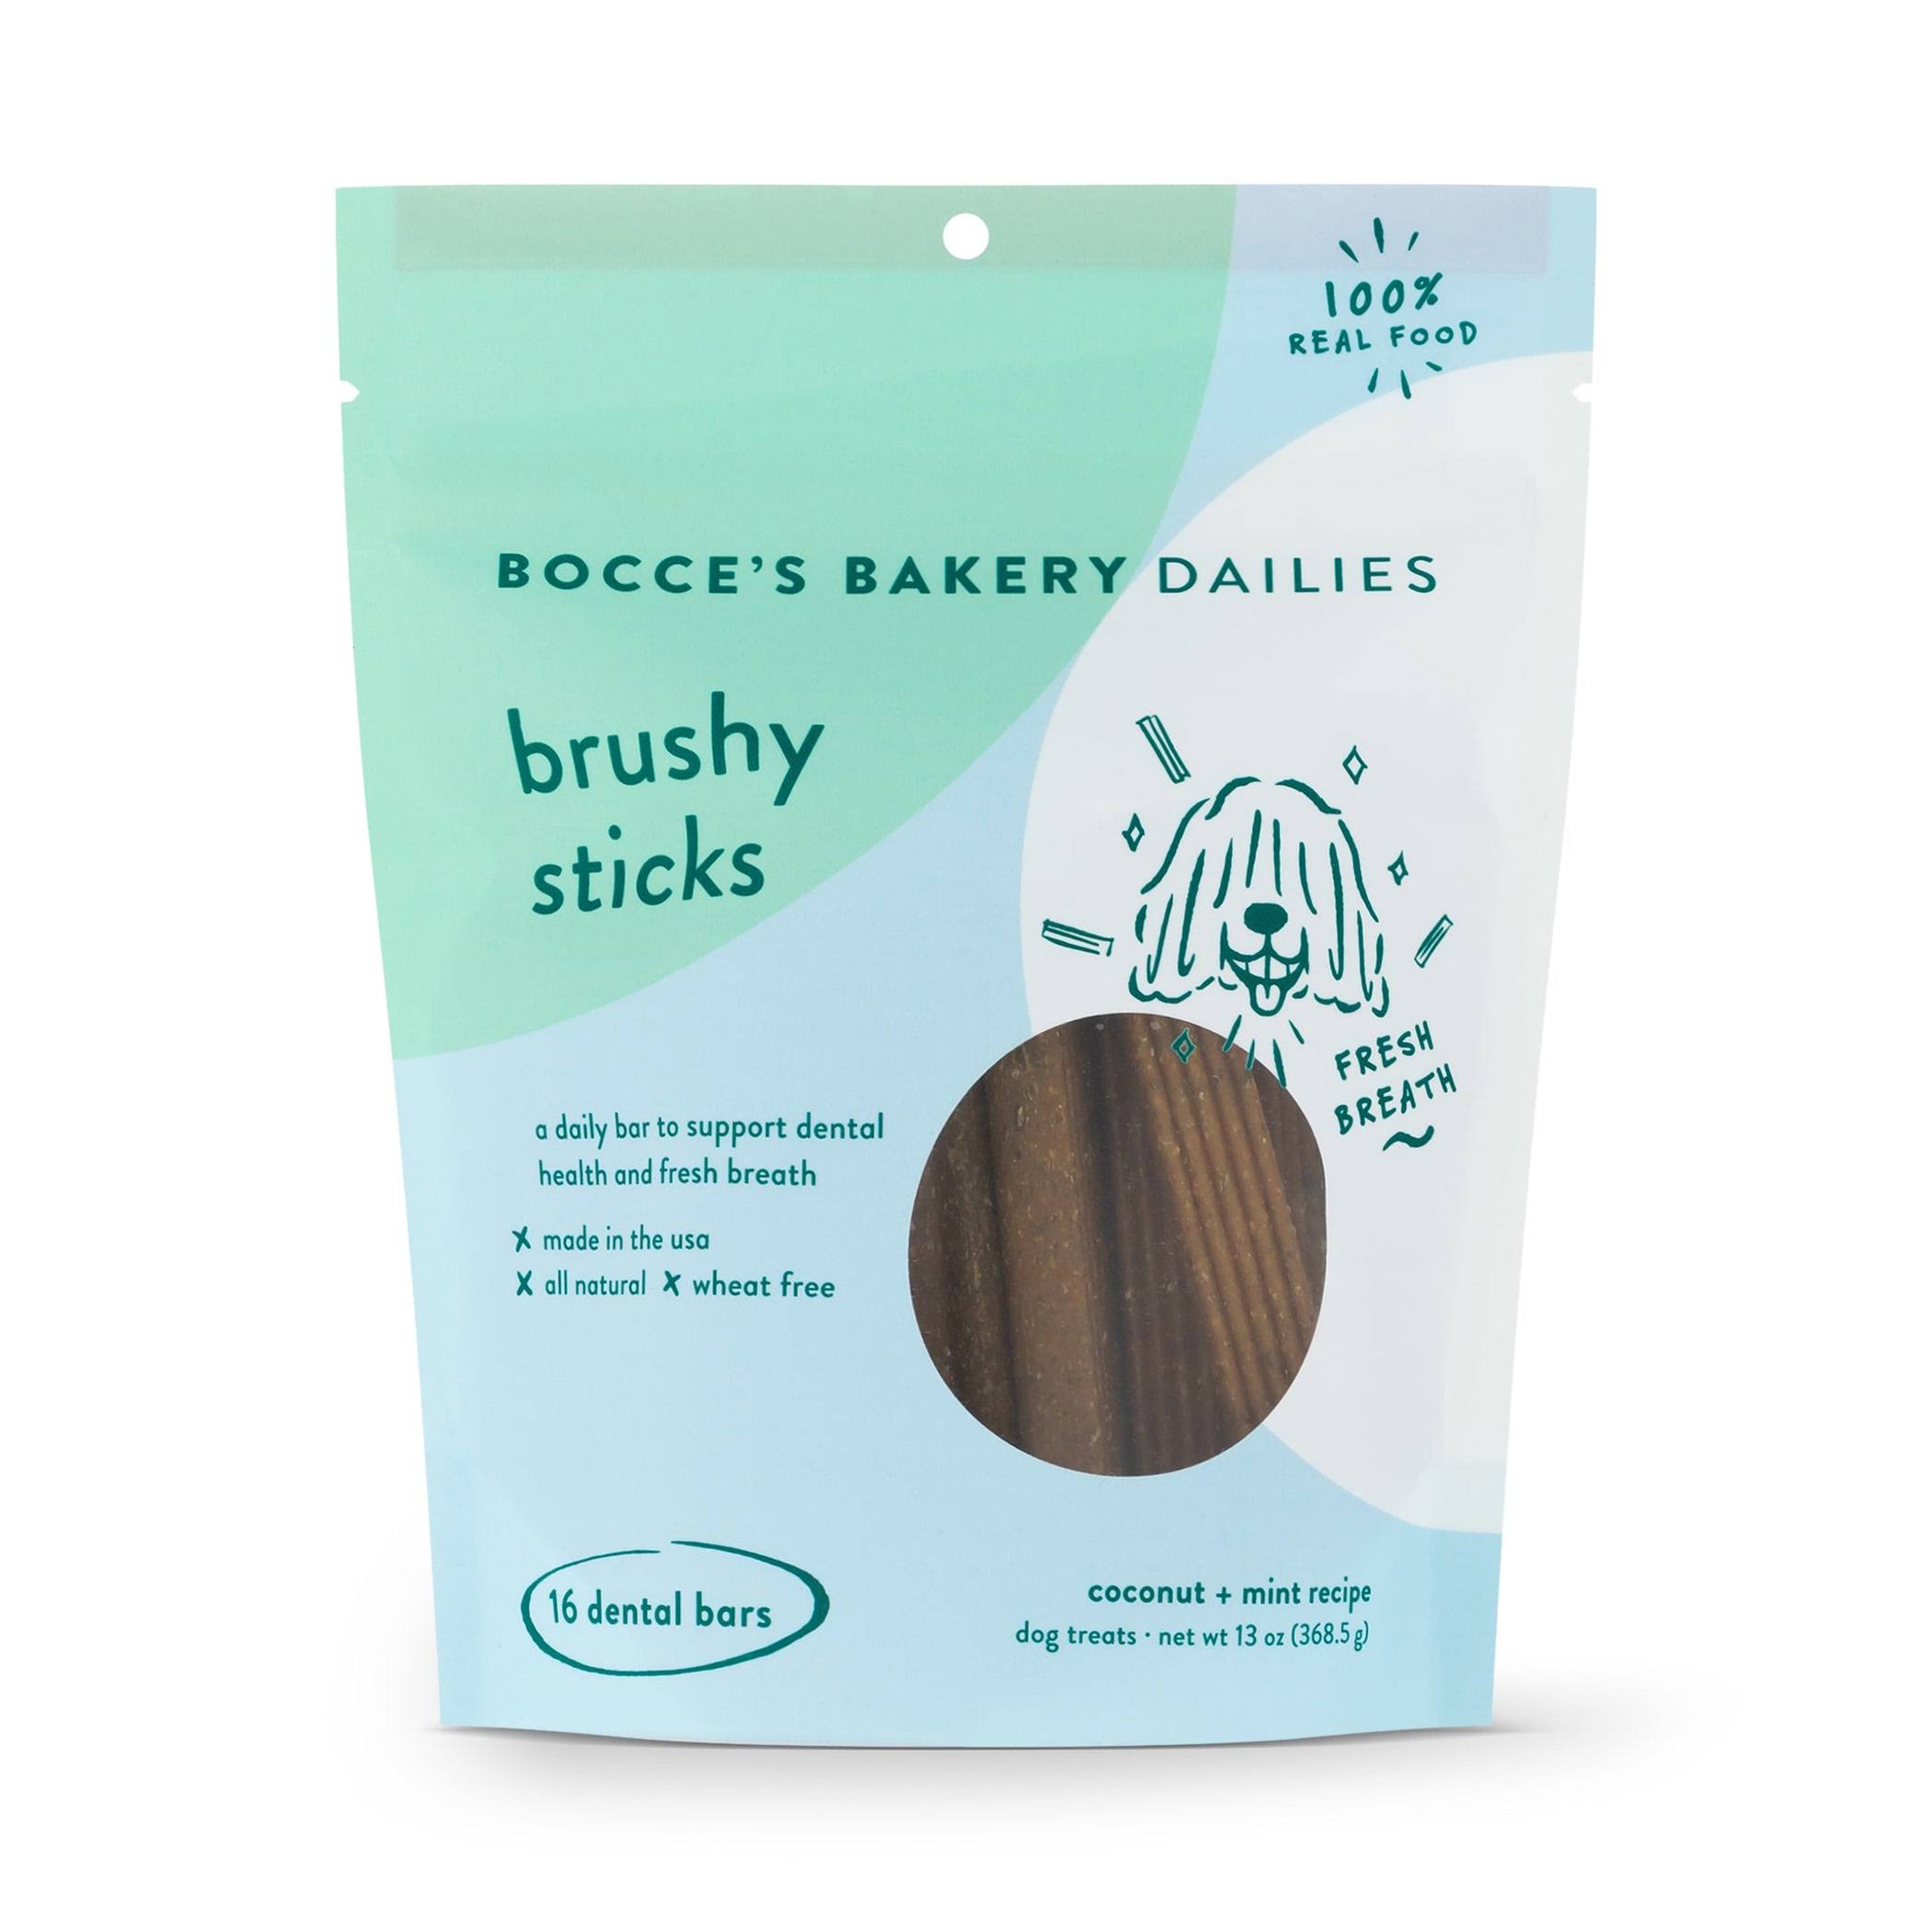 Bocce's Bakery Dailies Dental Bars, Coconut + Mint Recipe, Brushy Sticks - 16 bars, 13 oz